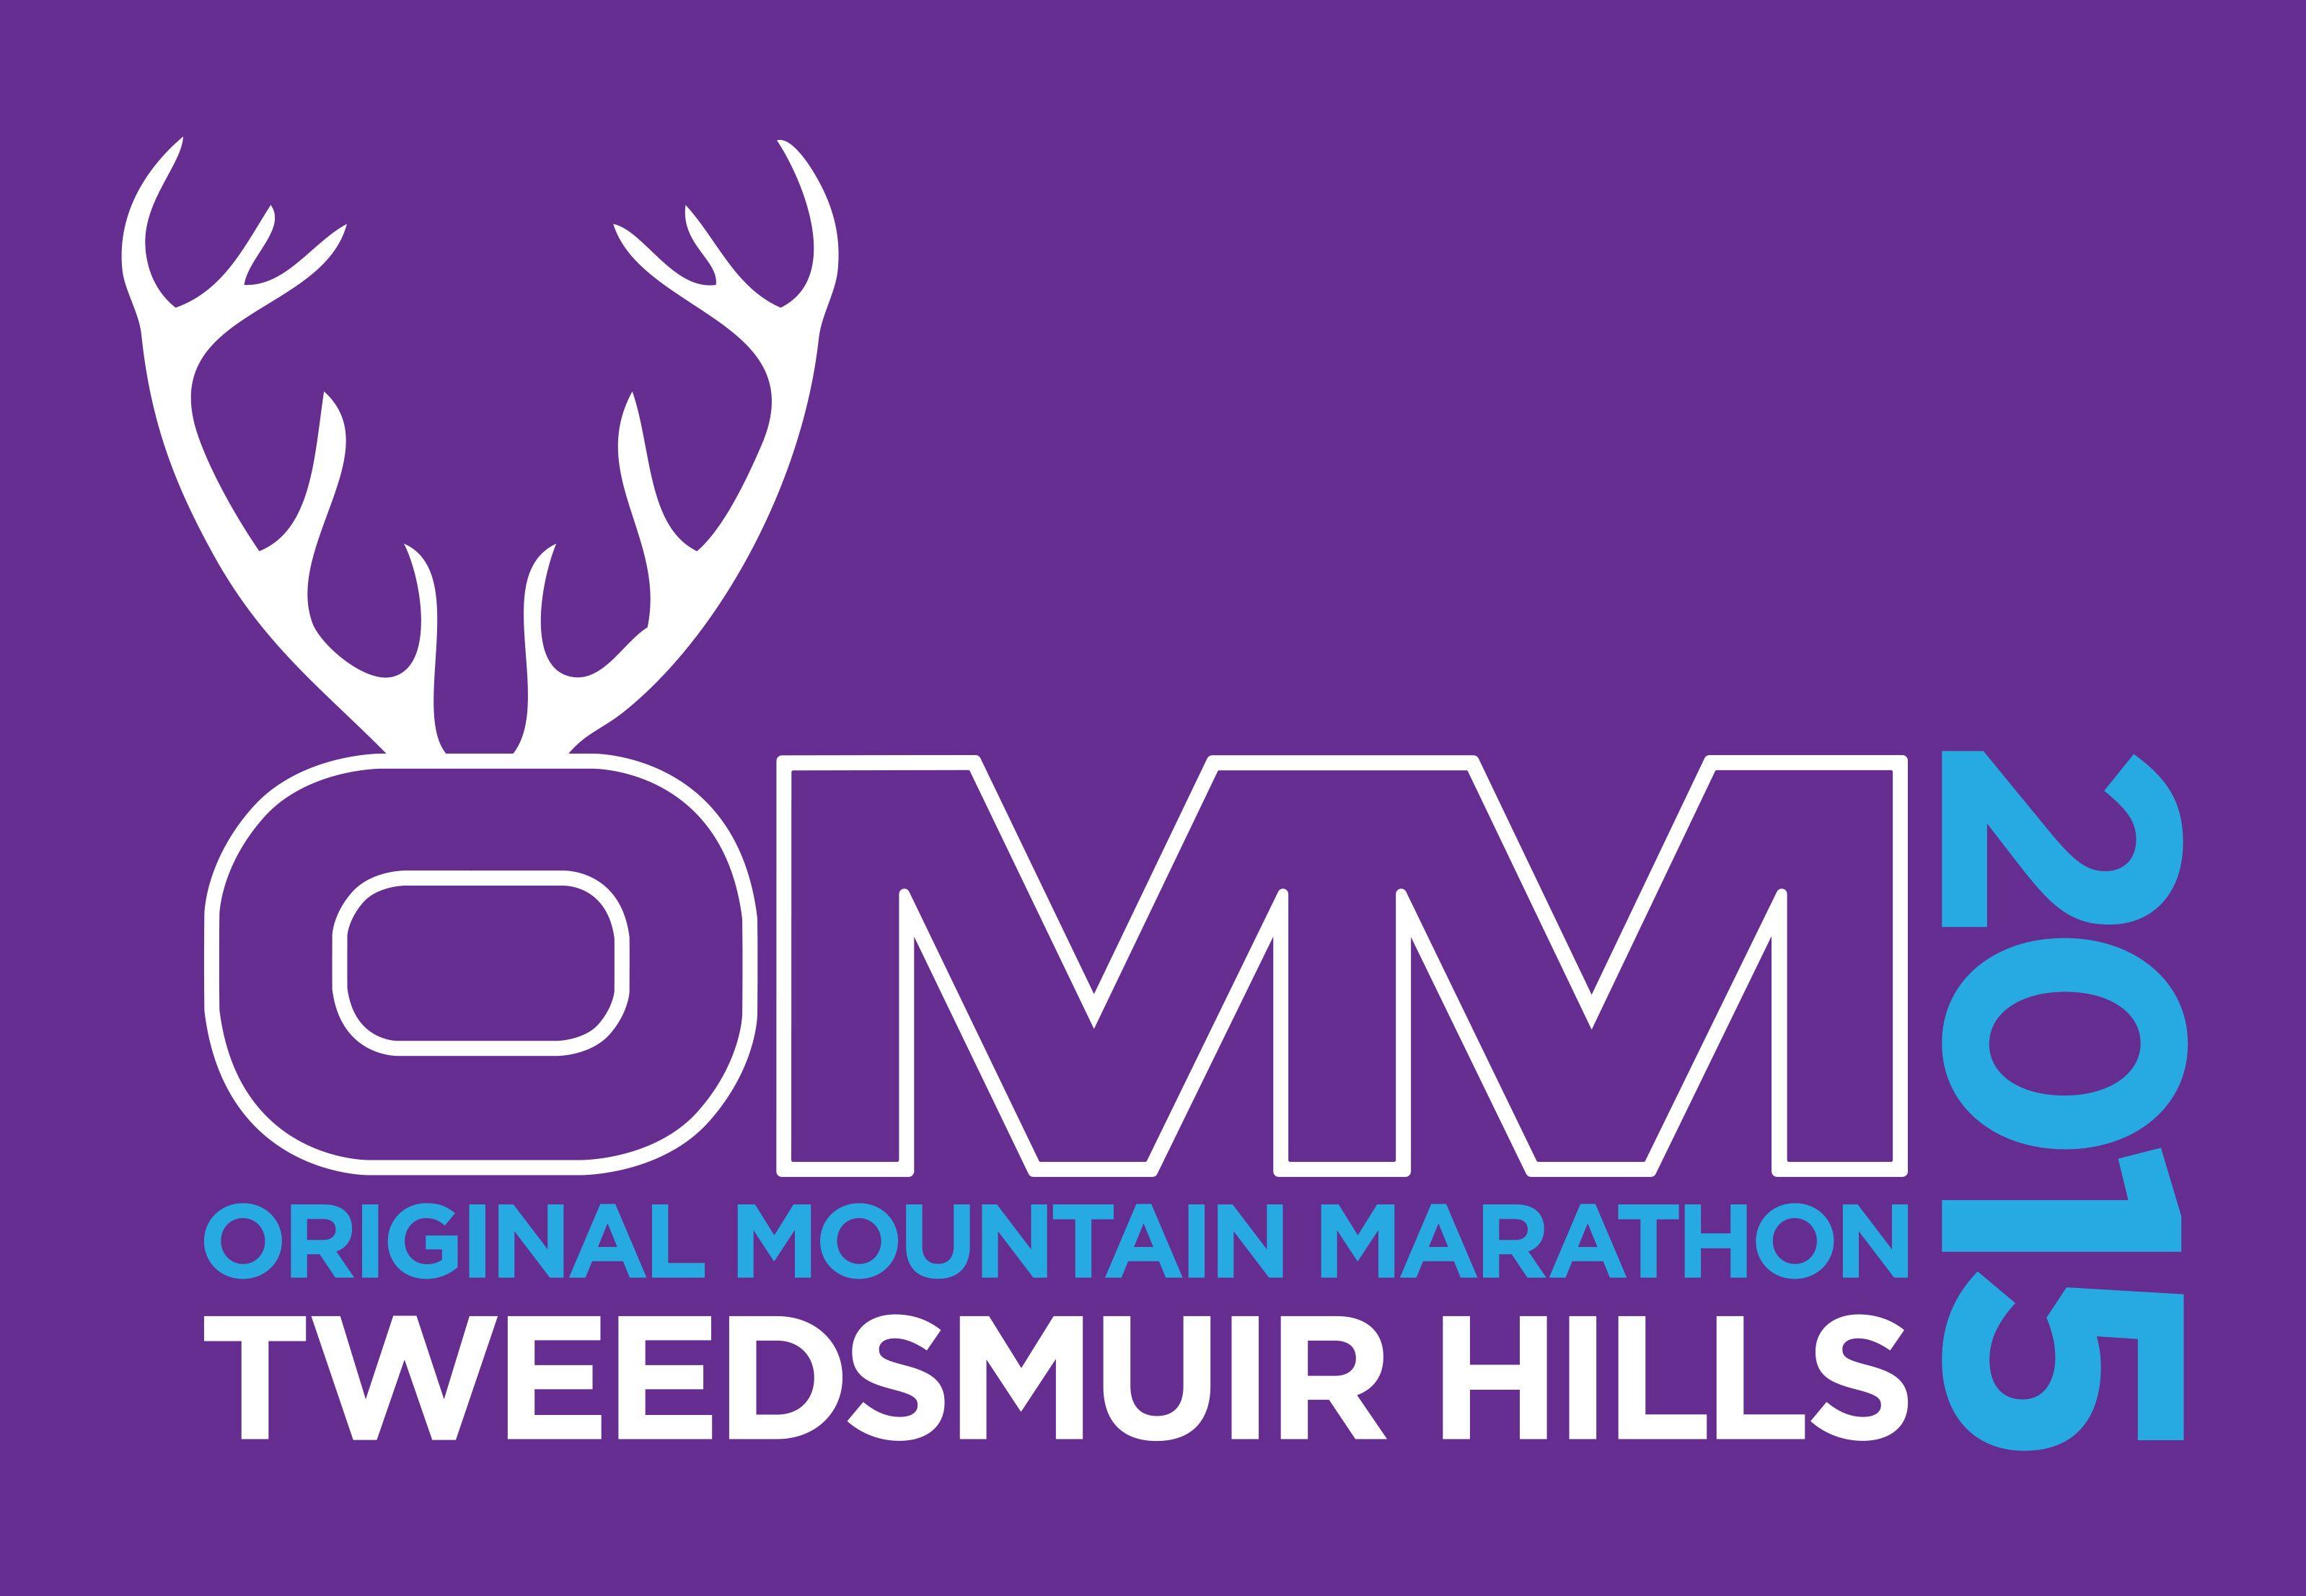 Original Mountain Logo - New Adventure: The Original Mountain Marathon (OMM) 2015's